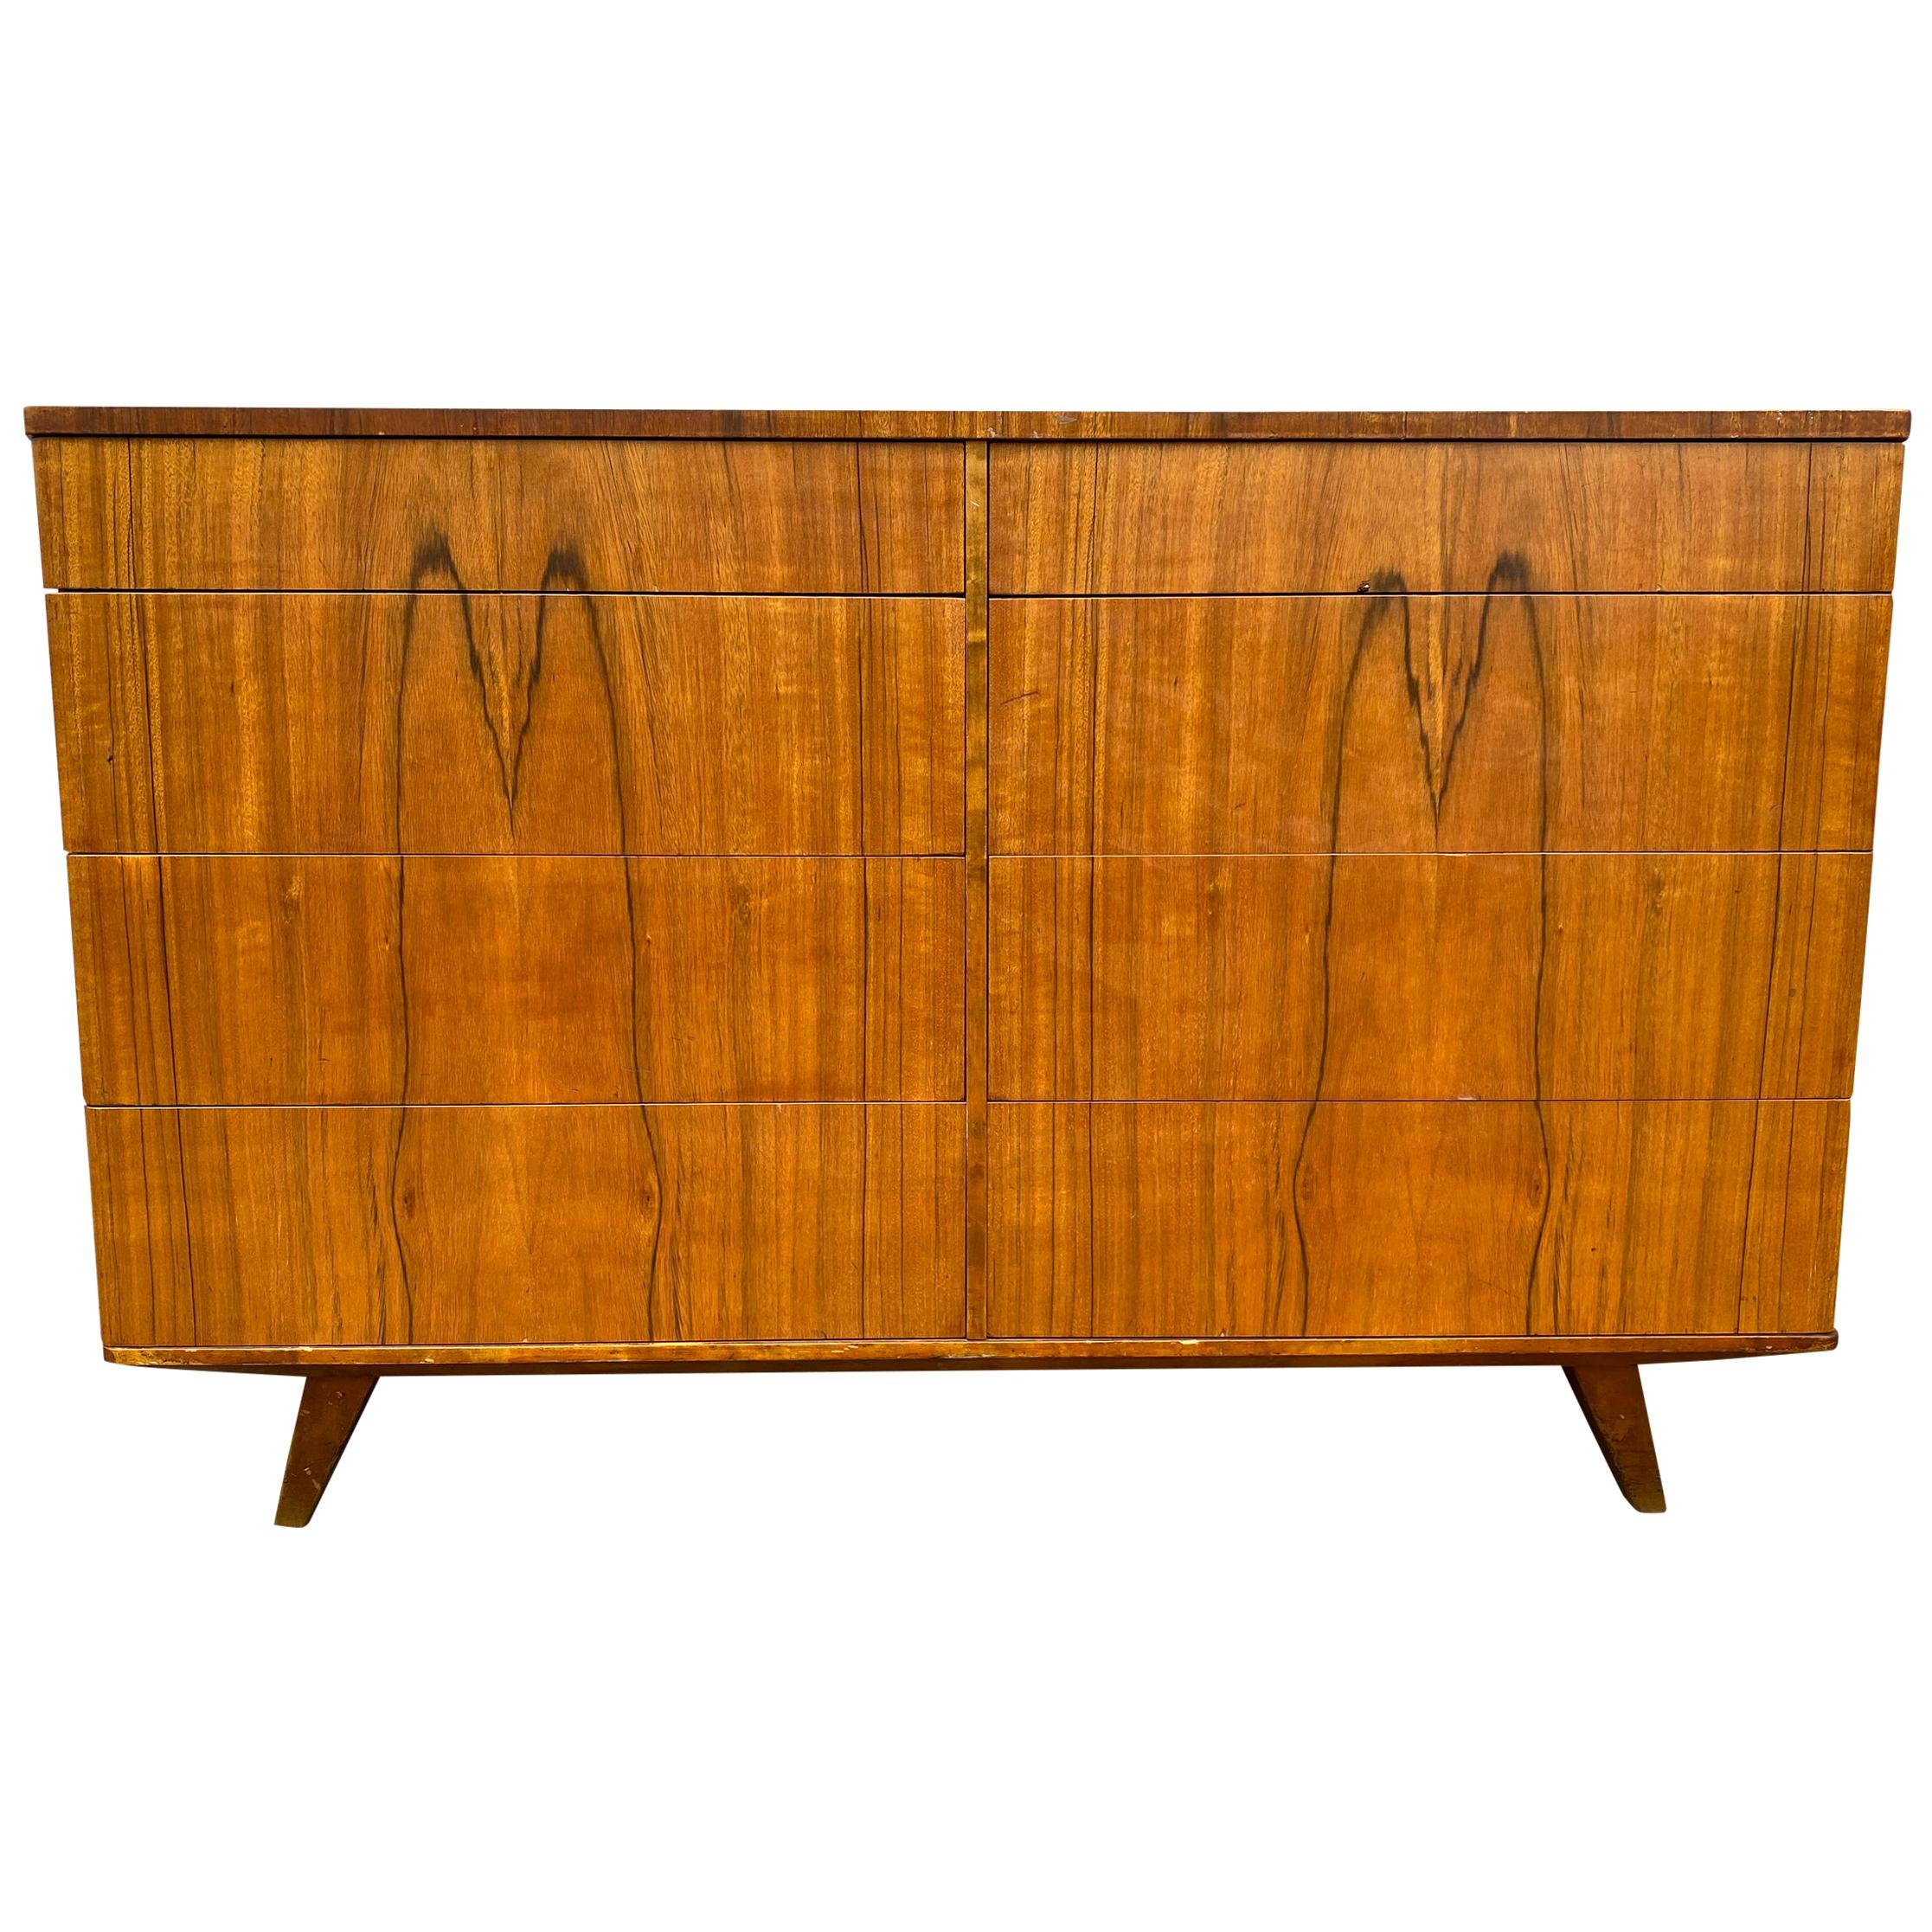 Stunning Midcentury 8 Drawer Rosewood Veneer Dresser Made in Sweden